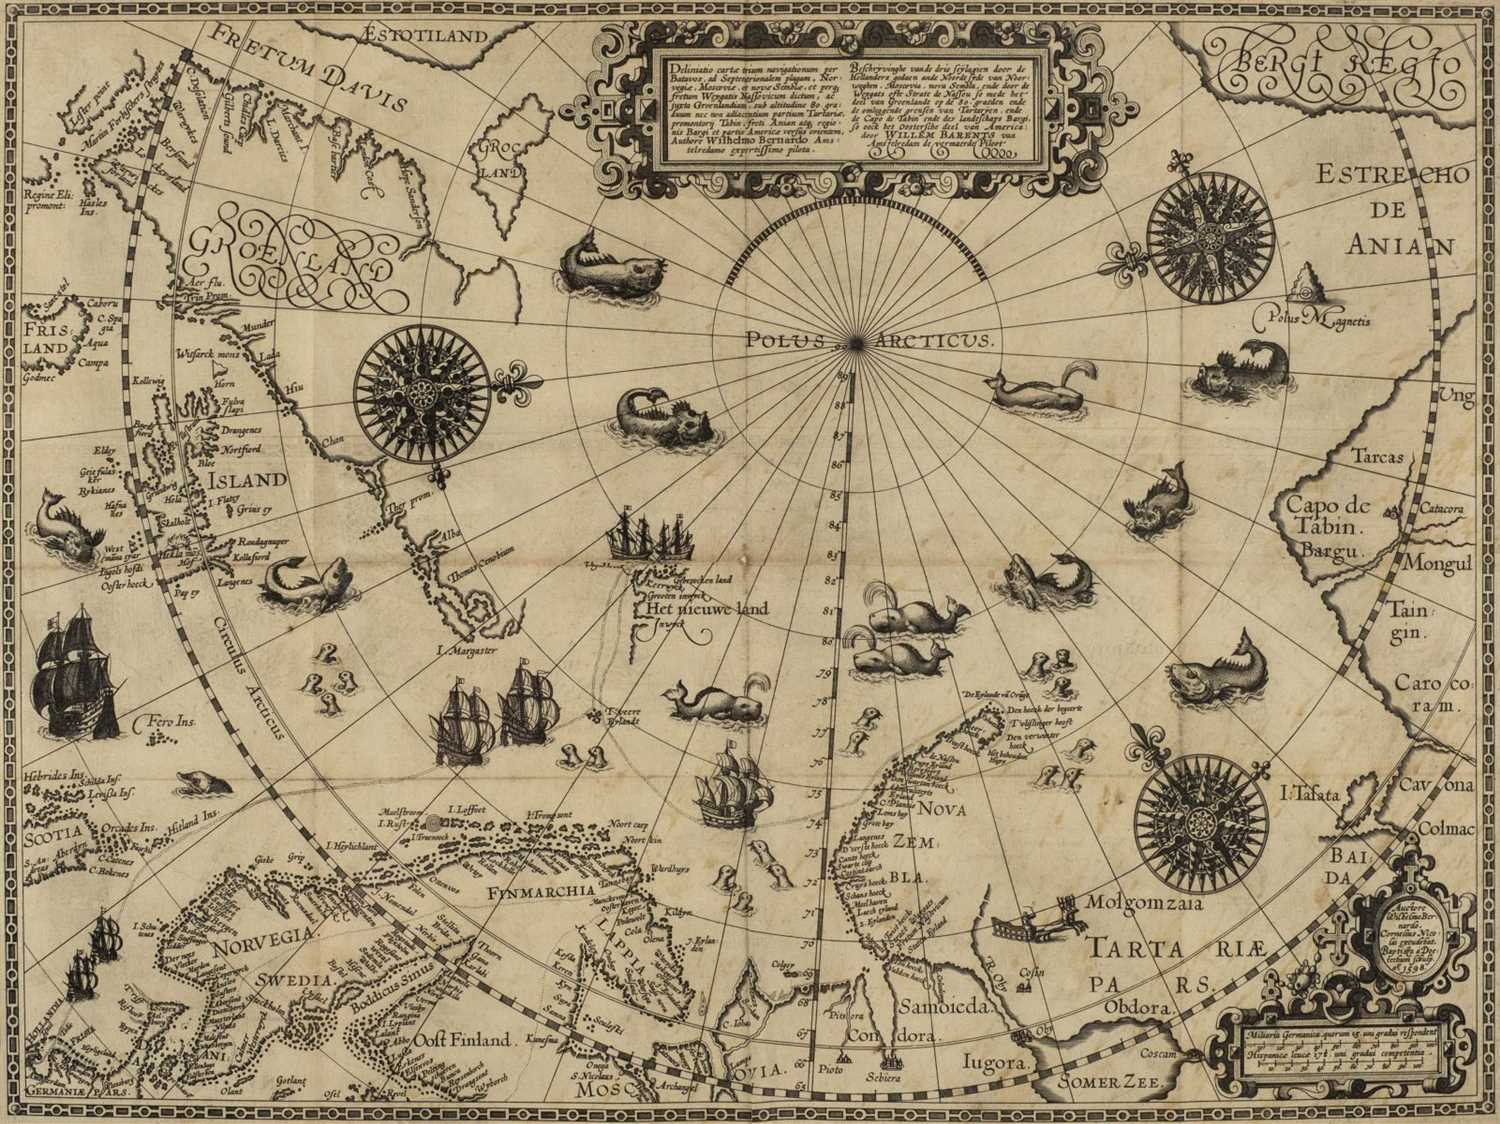 Lot 43 - Linschoten (Jan Huyghen van). Navigatio ac itinerarium in orientalem, 1st edition in Latin, 1599